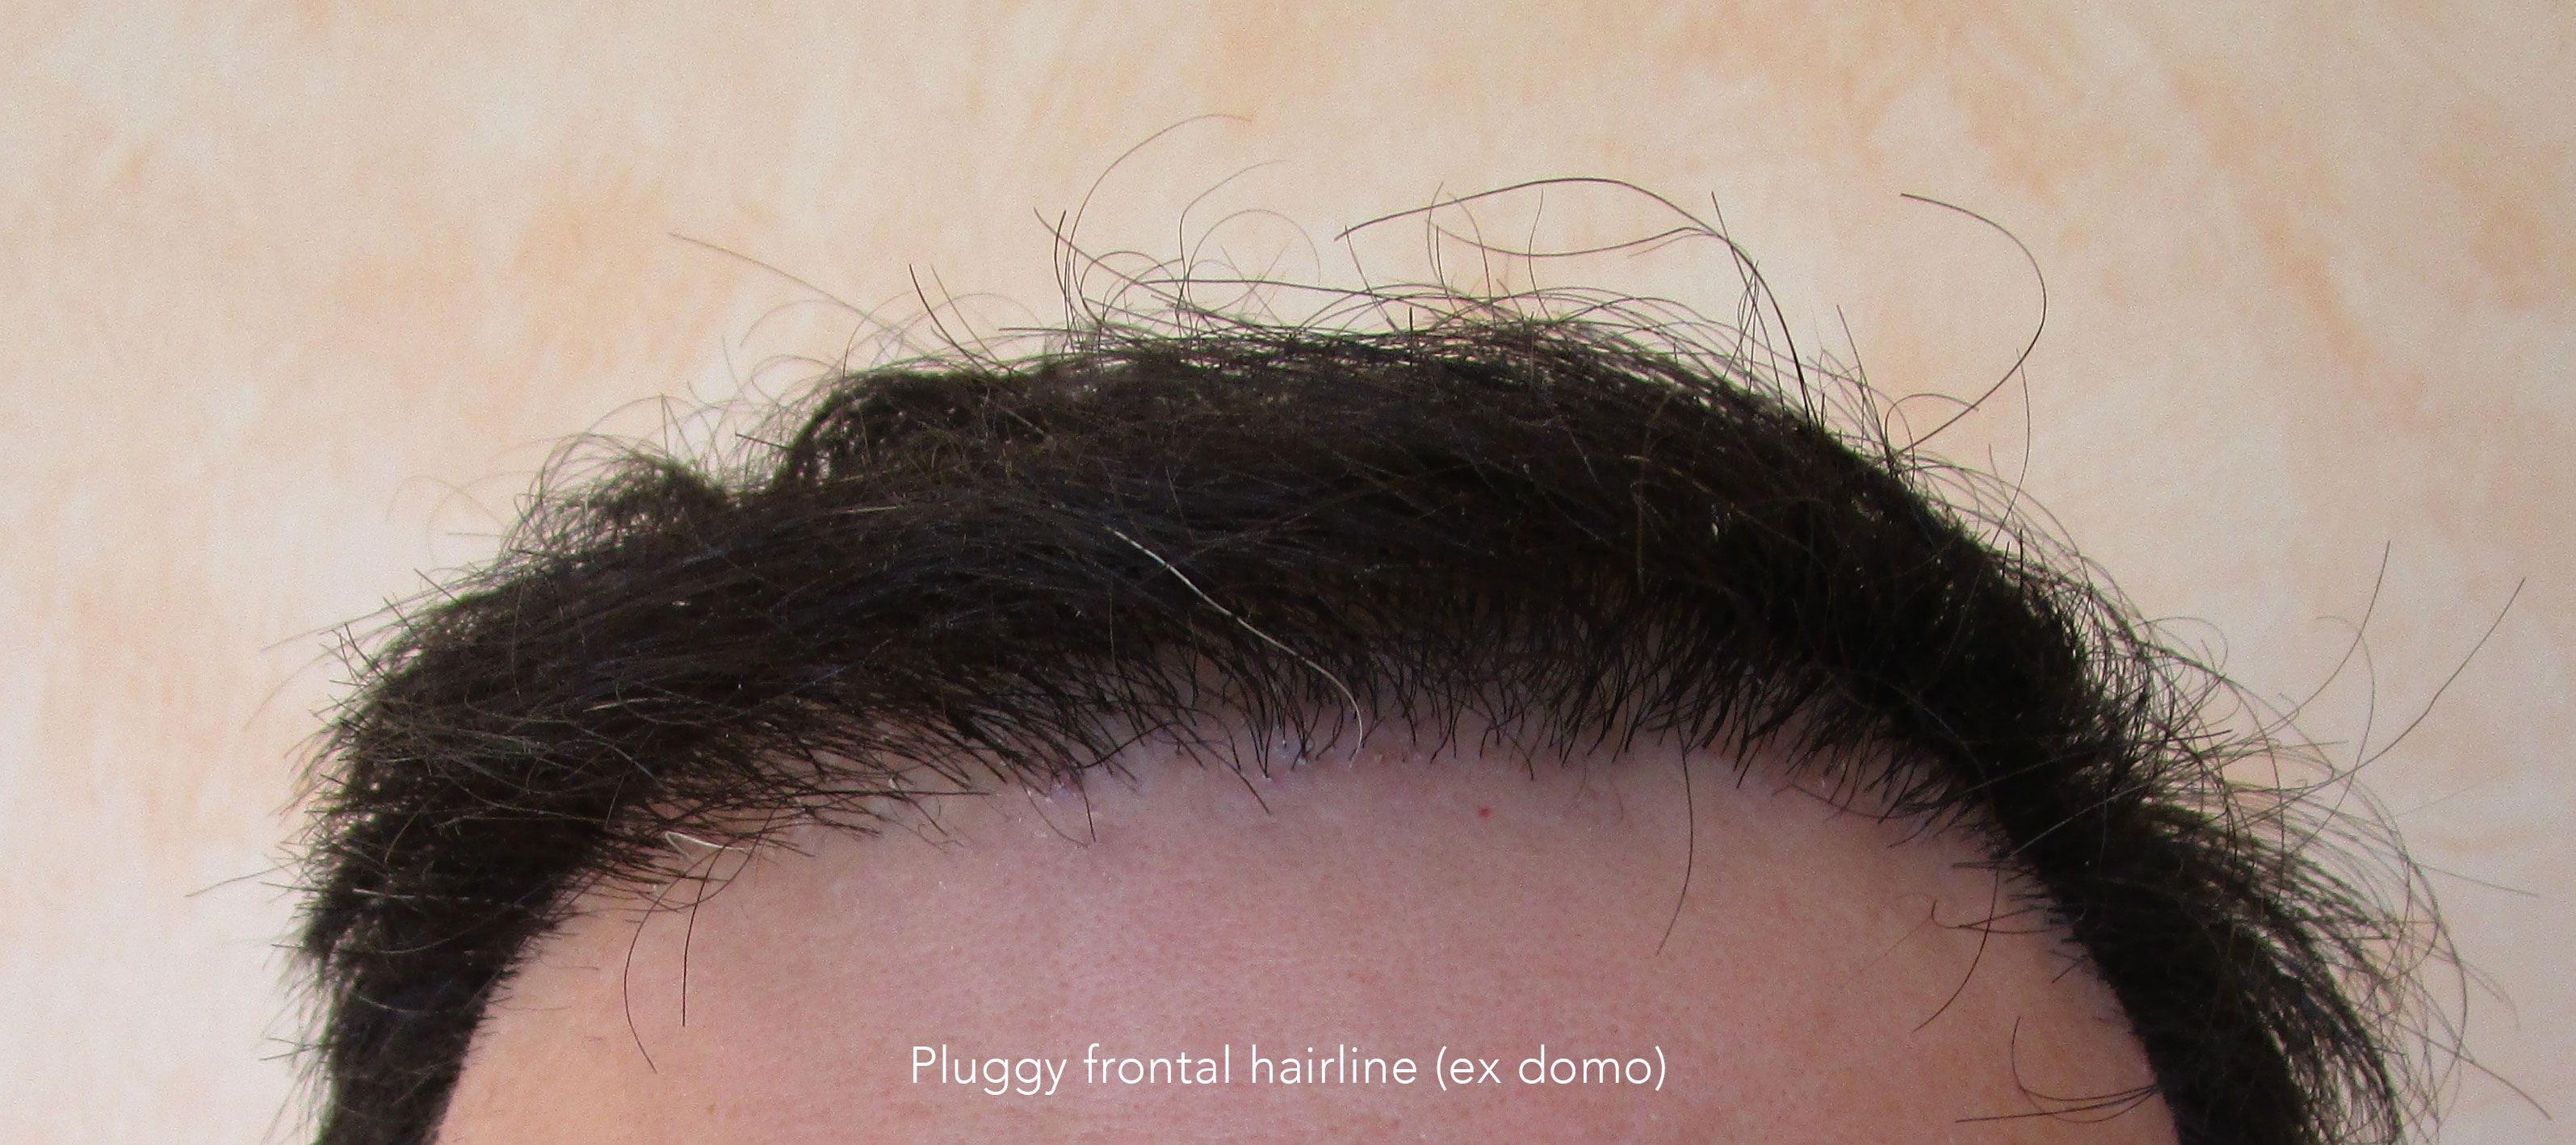 Preop1-hairline-a6d61a37 Repair - Dr. Feriduni